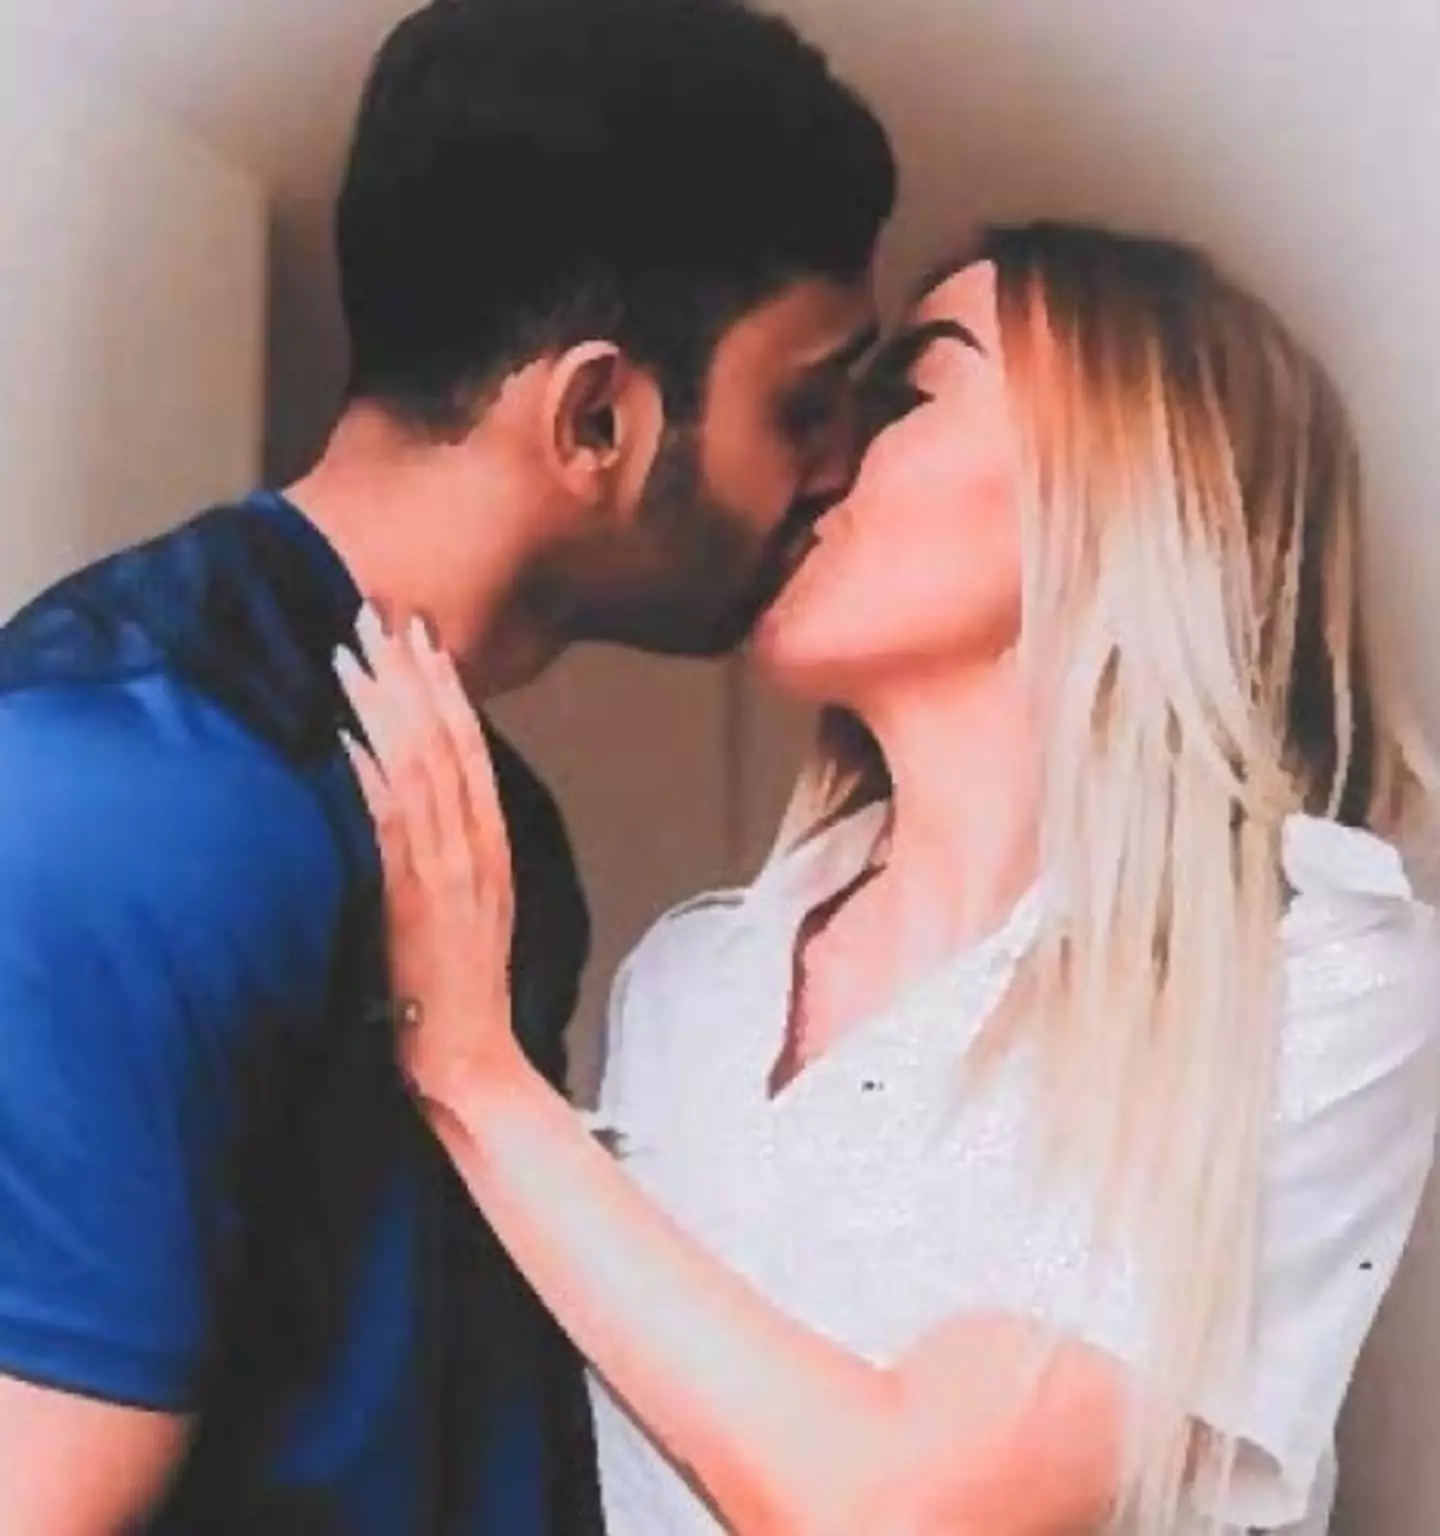 Photos found in  Ayesha Gunn's bedroom showed her passionately kissing inmate Khuram Razaq.